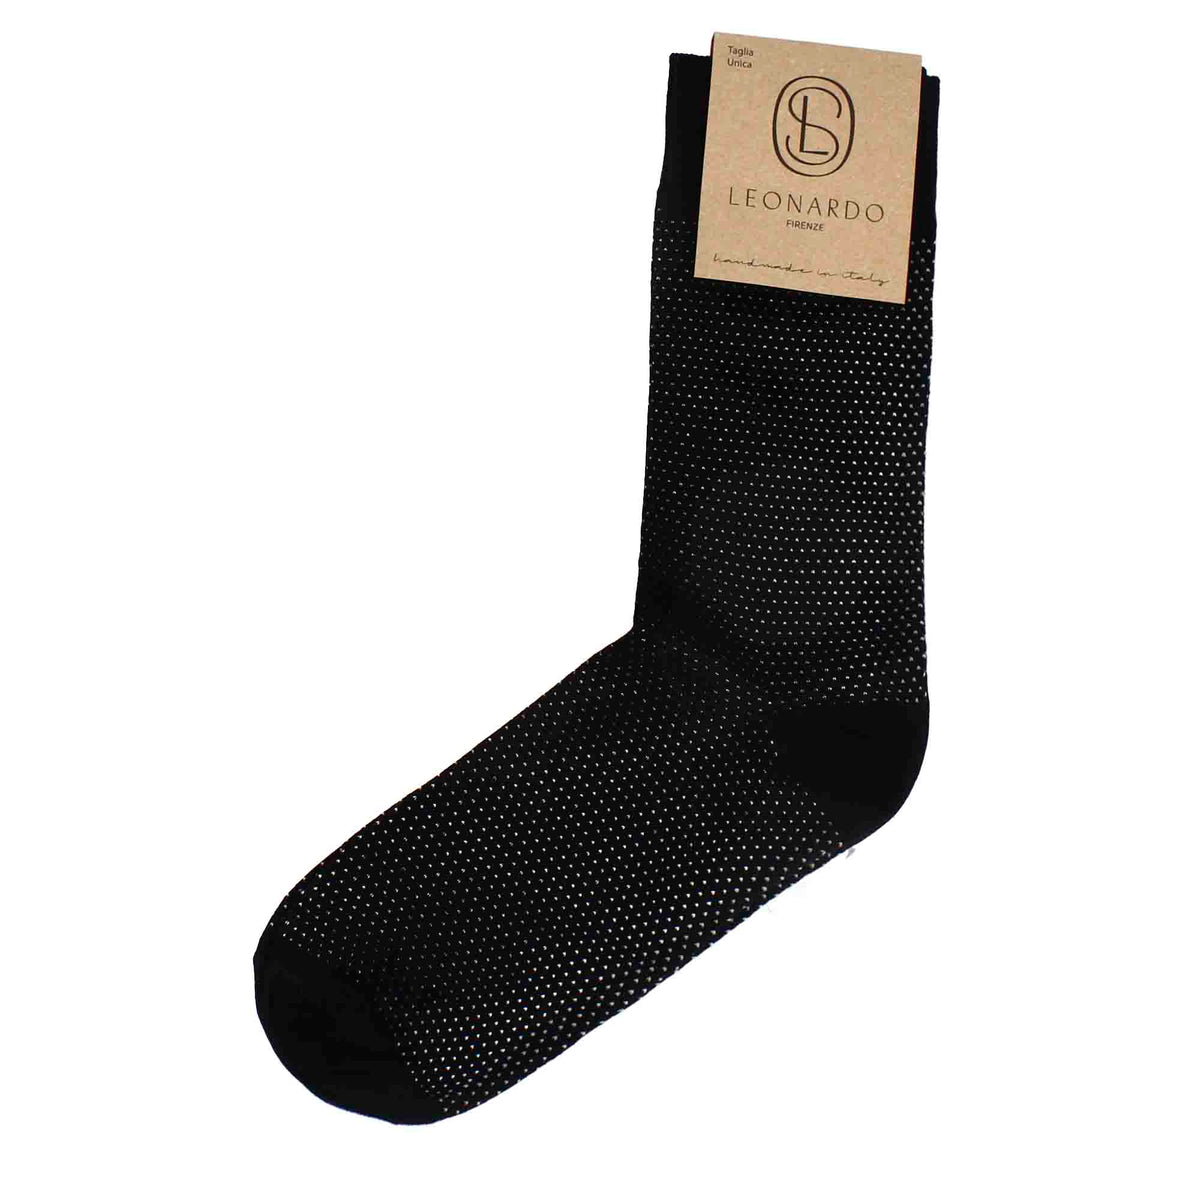 Men's black cotton socks with white polka dots